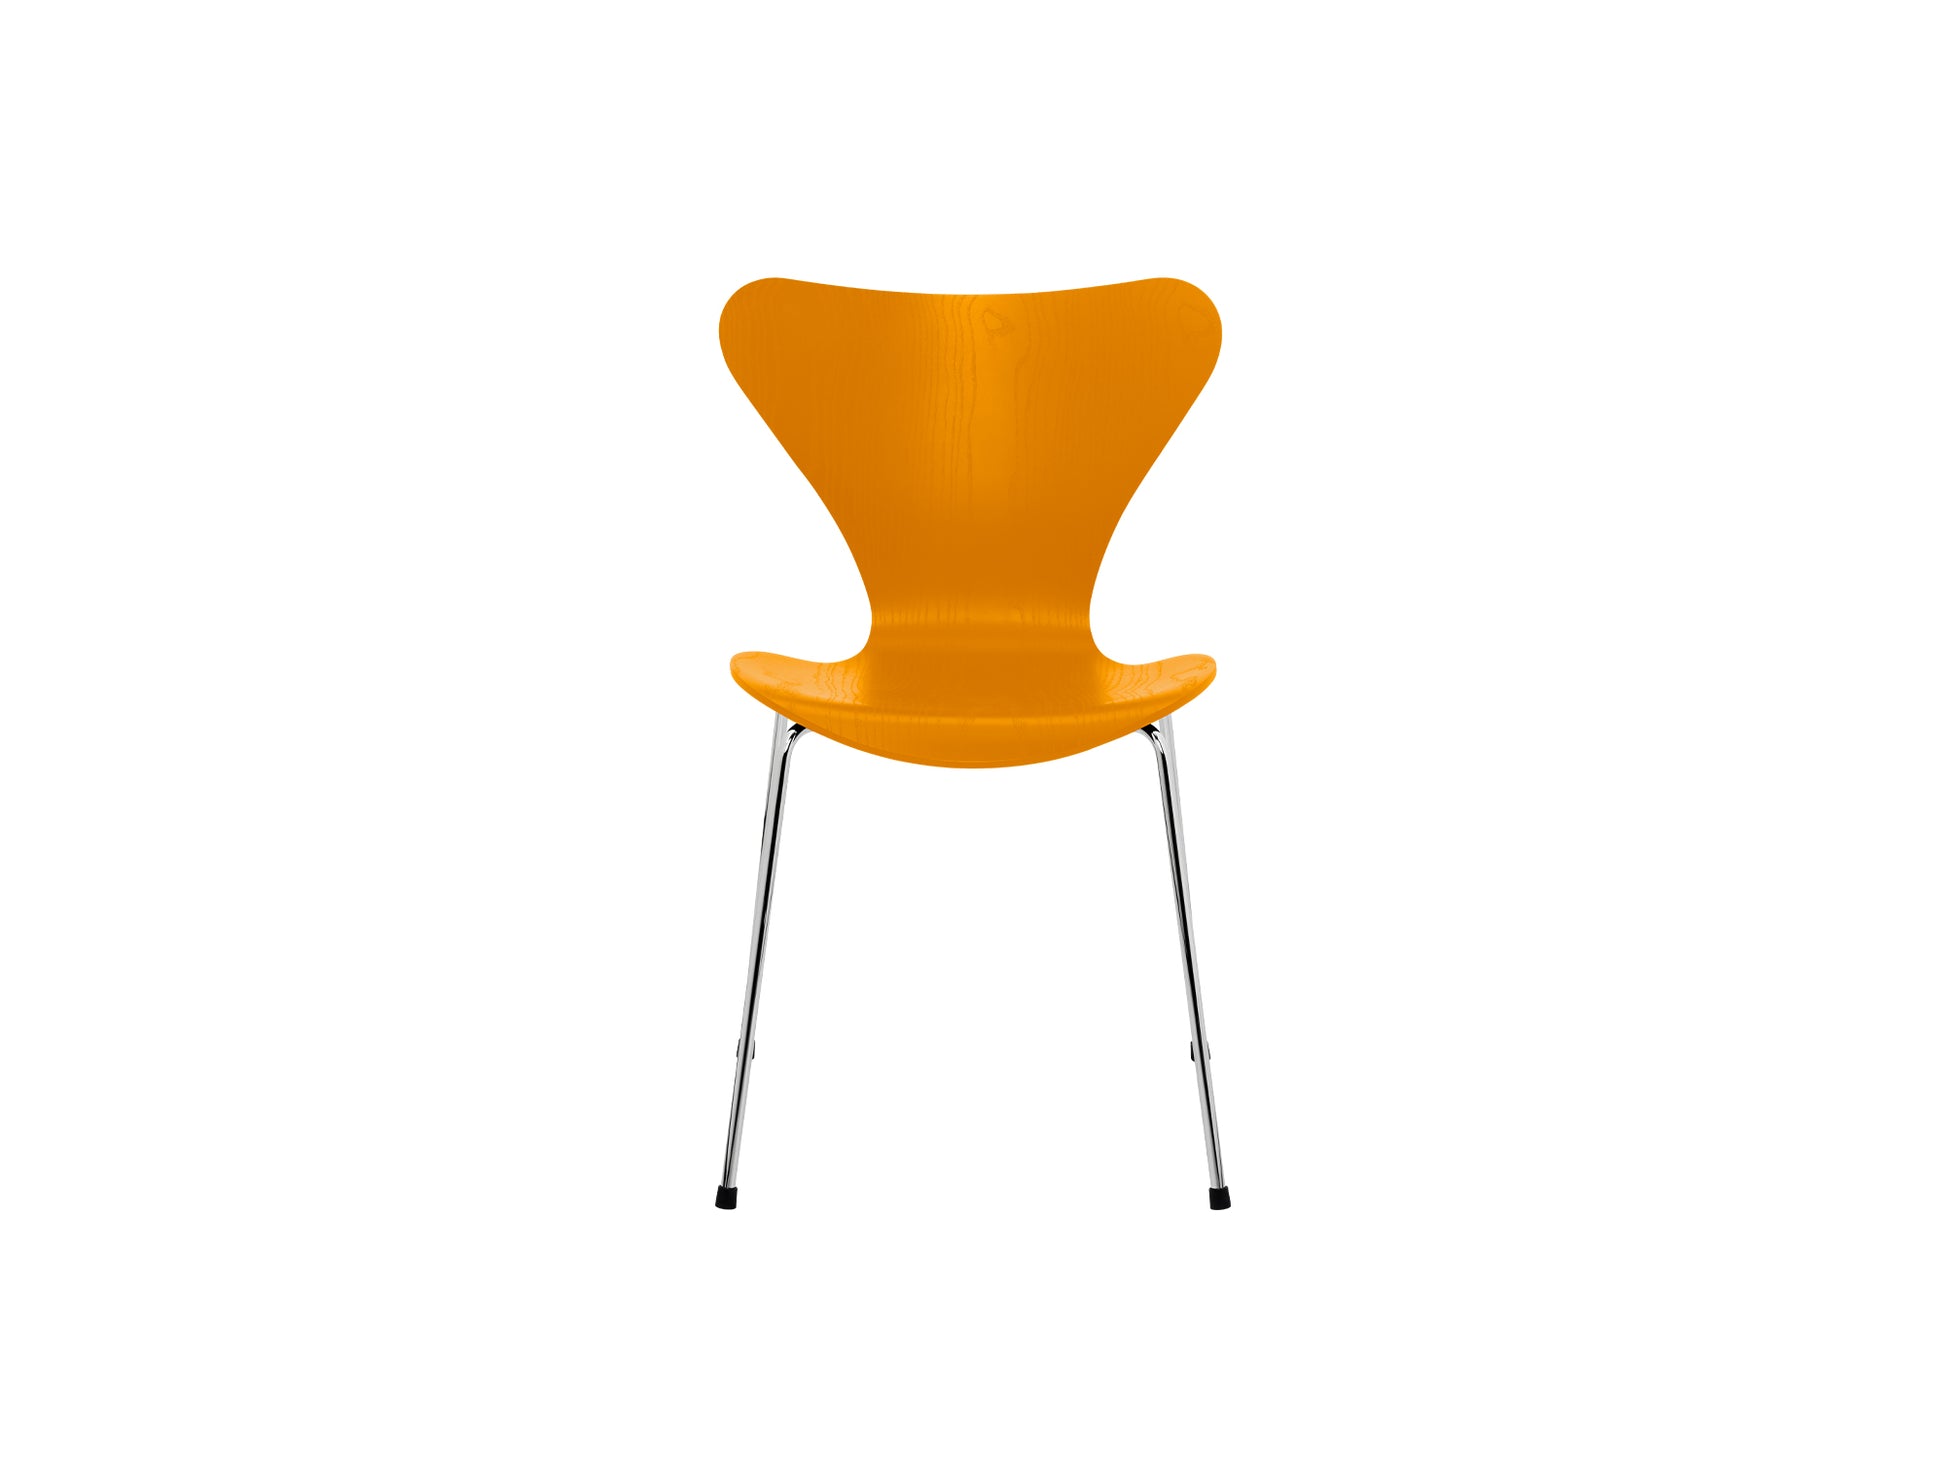 Series 7™ 3107 Dining Chair by Fritz Hansen - Burnt Yellow Coloured Ash Veneer Shell / Chromed Steel